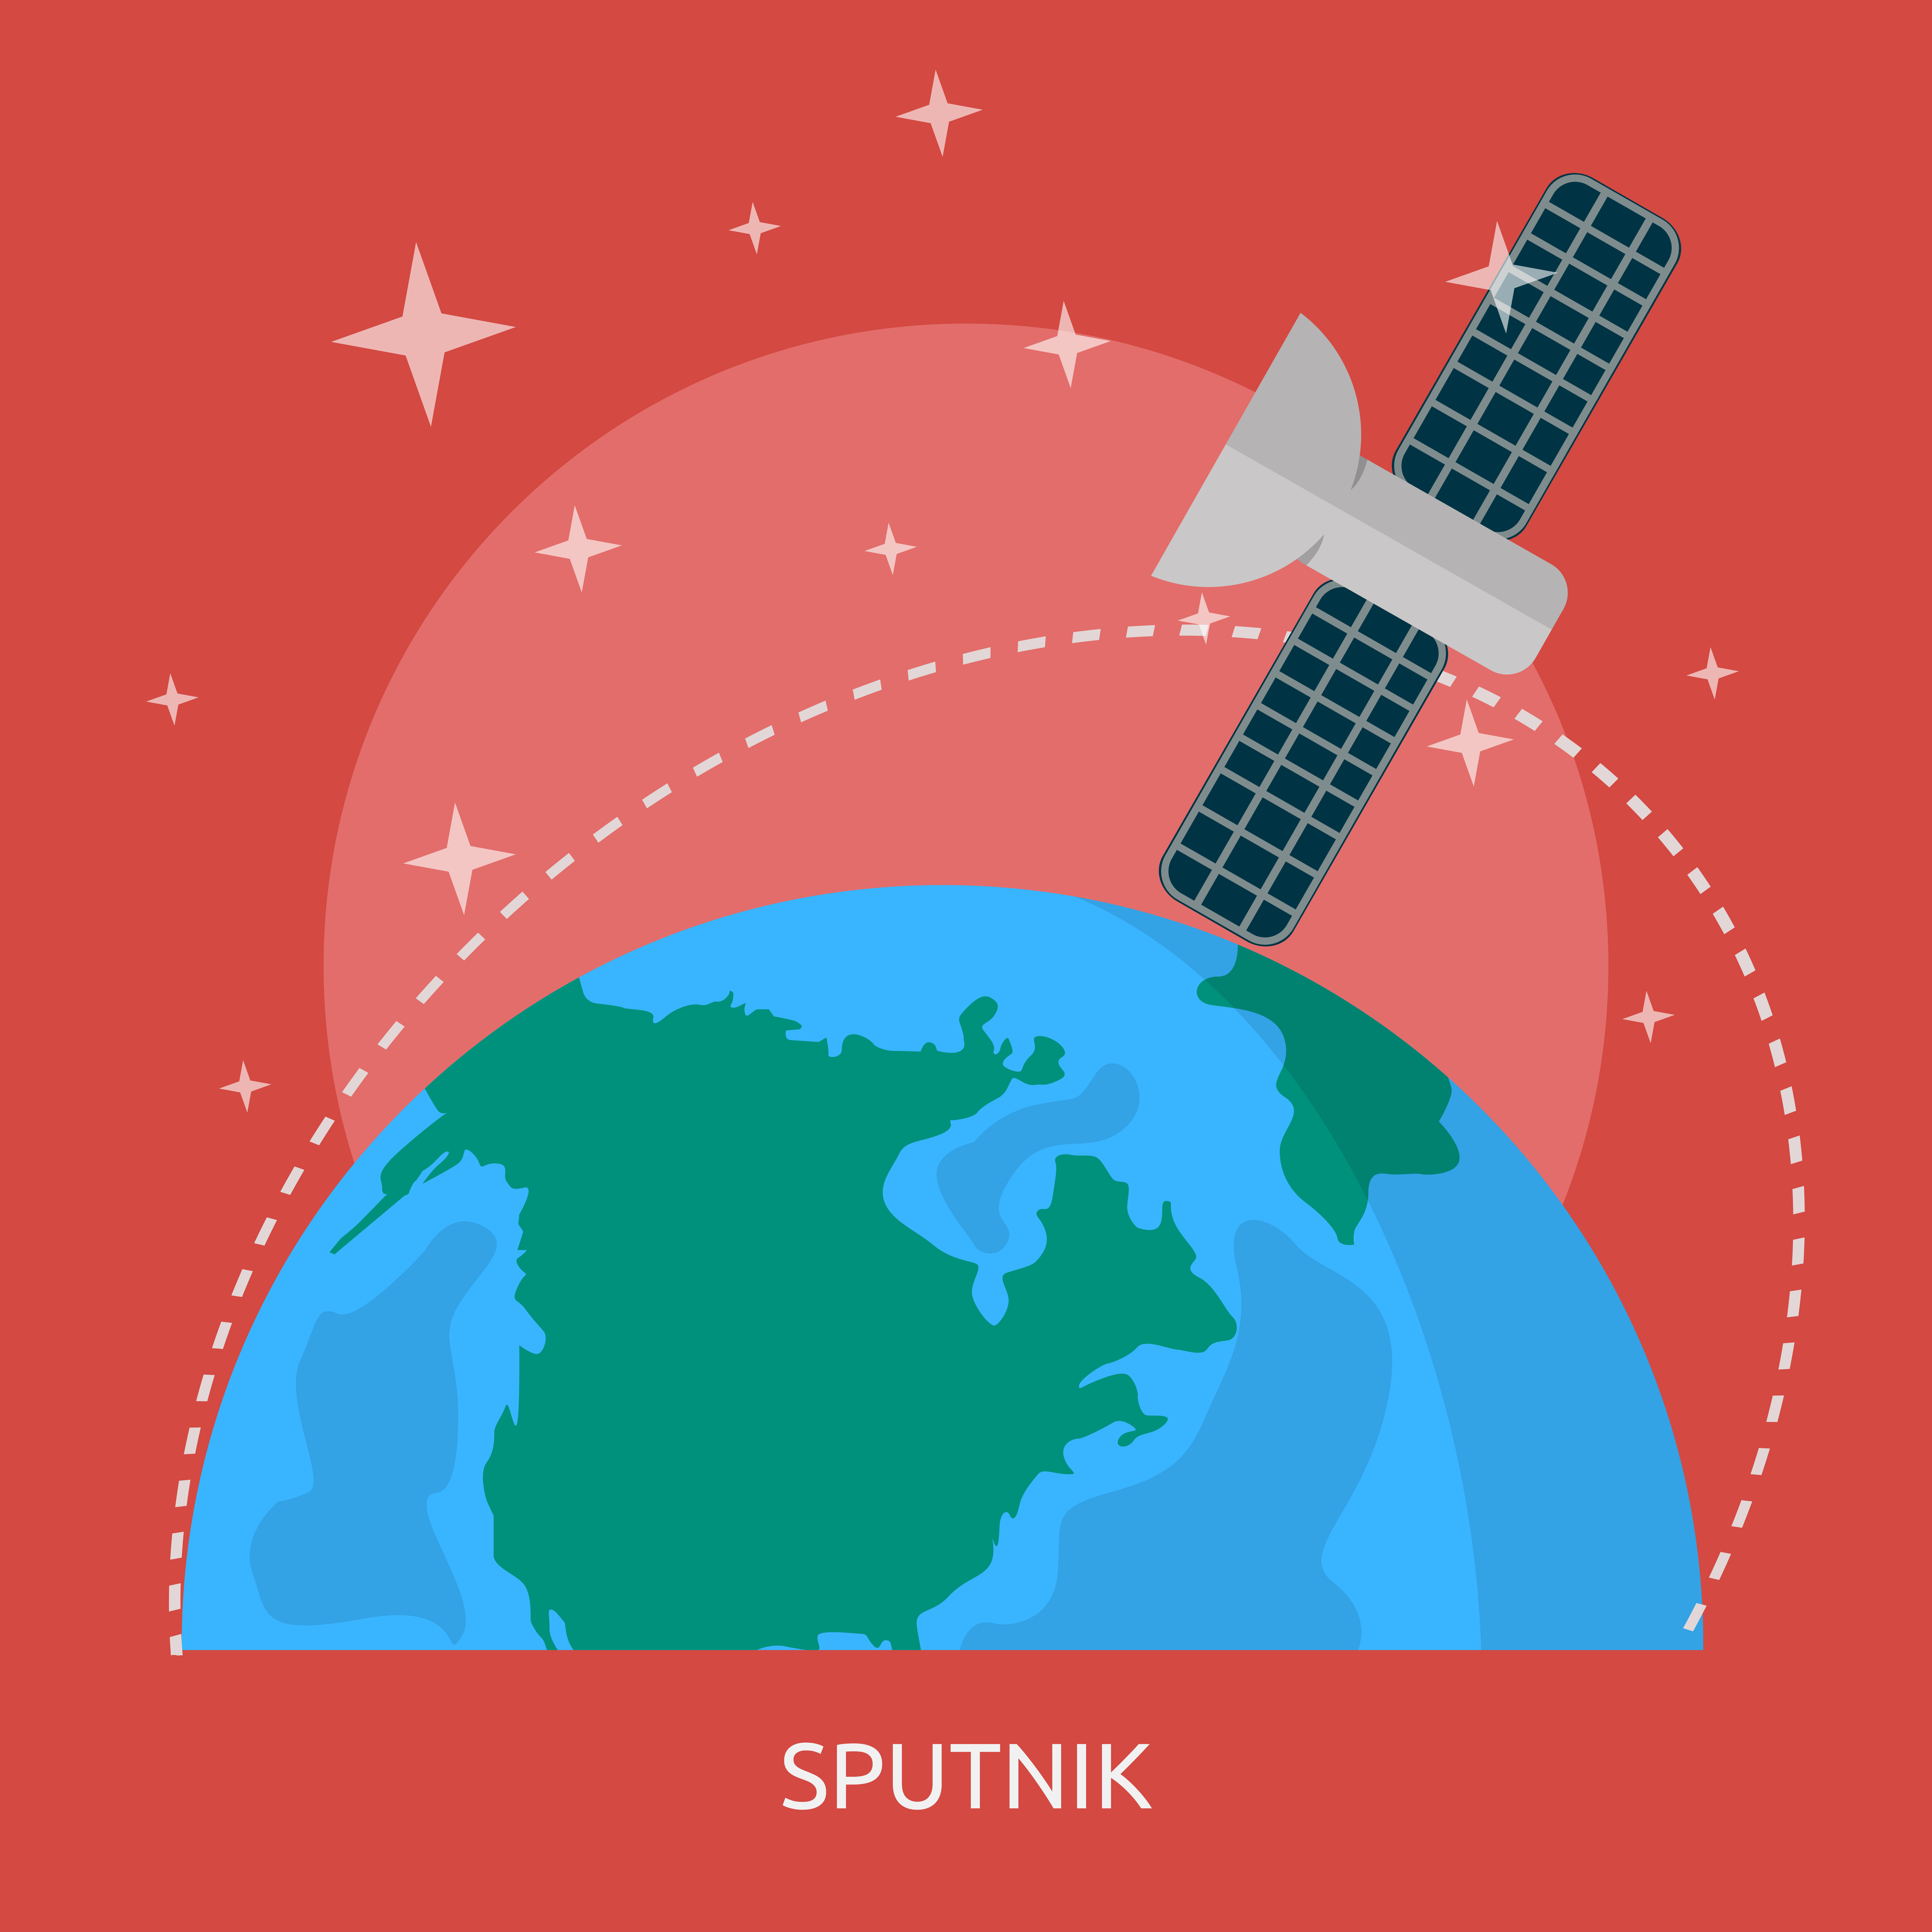 «Спутник v» illustration